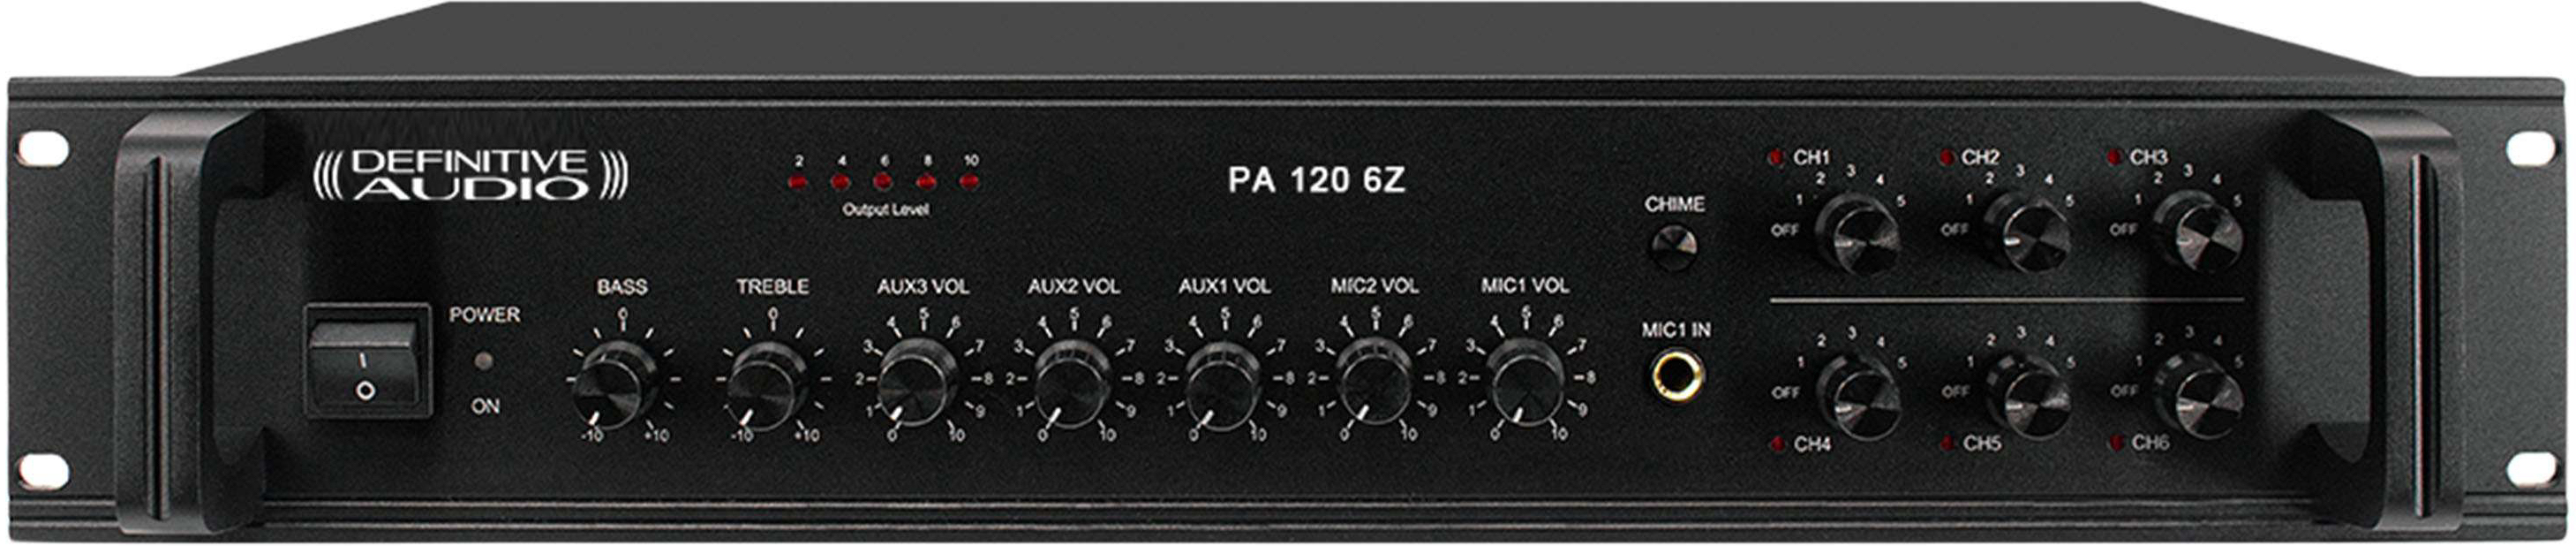 Definitive Audio Pa 120 6z - Multi-kanalen krachtversterker - Main picture